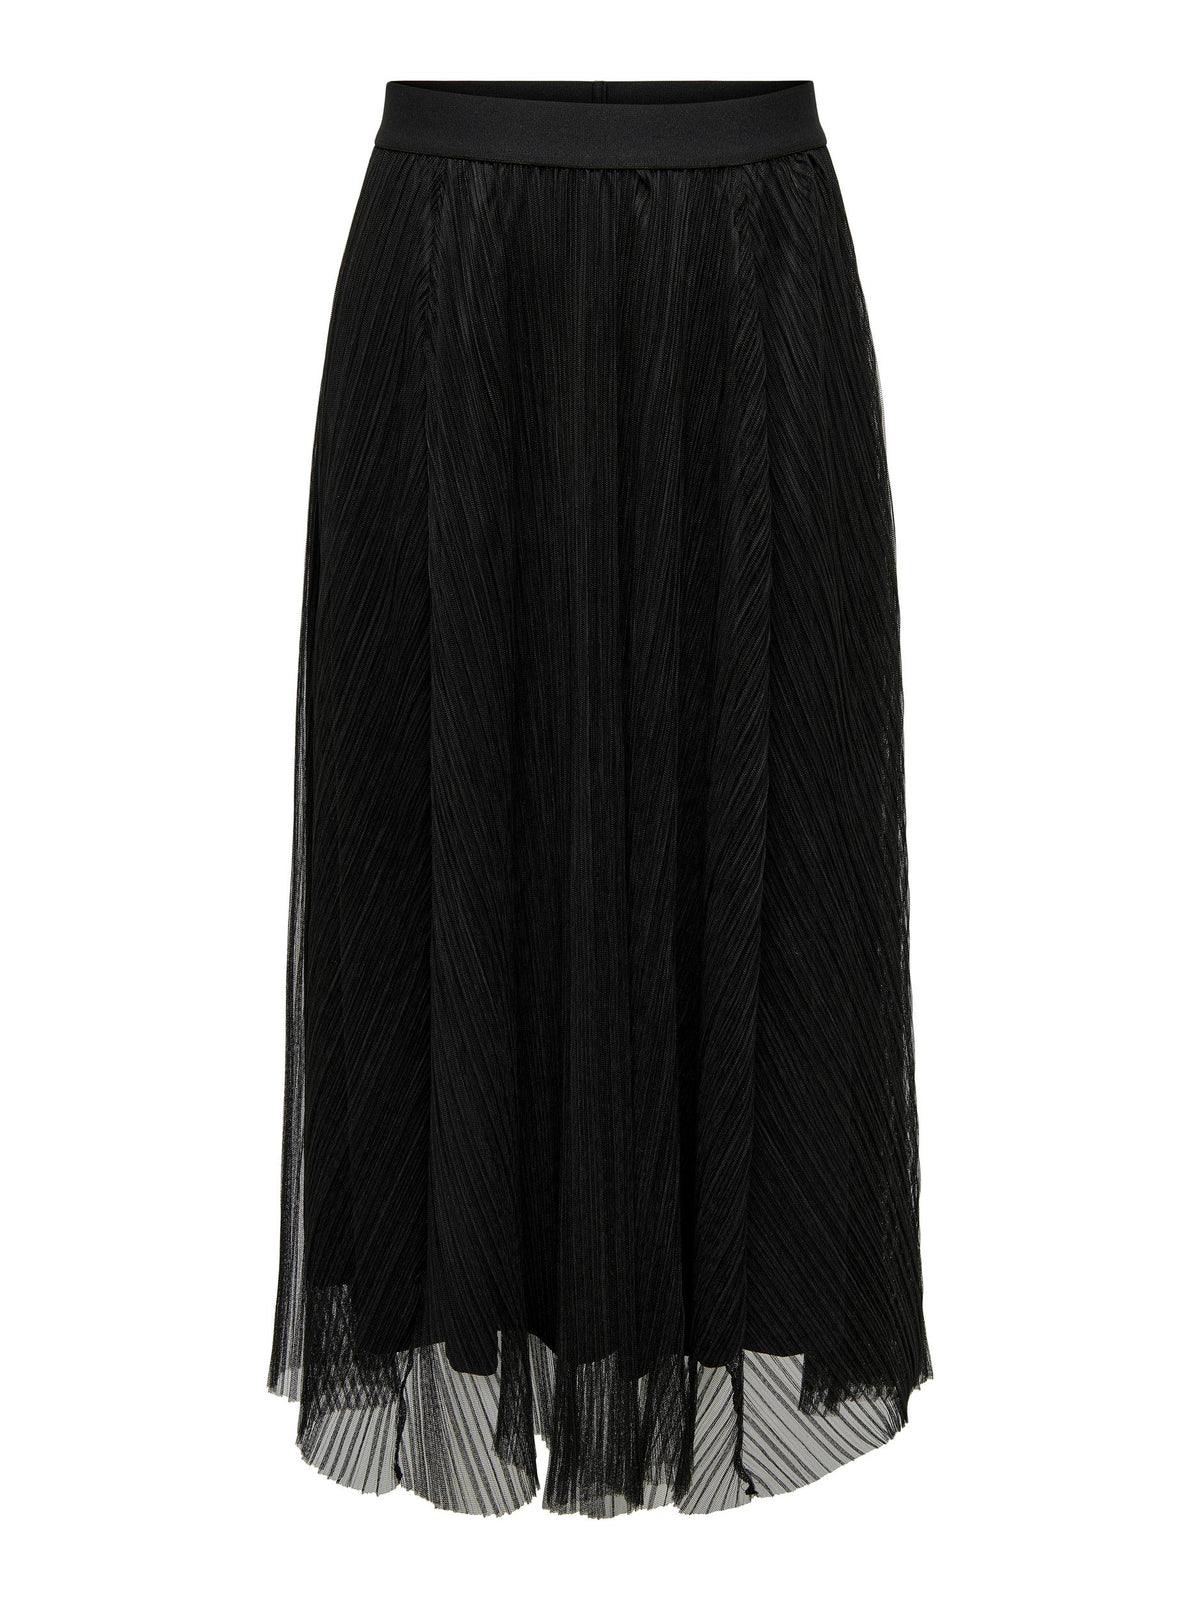 Only Carmakoma Black Pleated Skirt